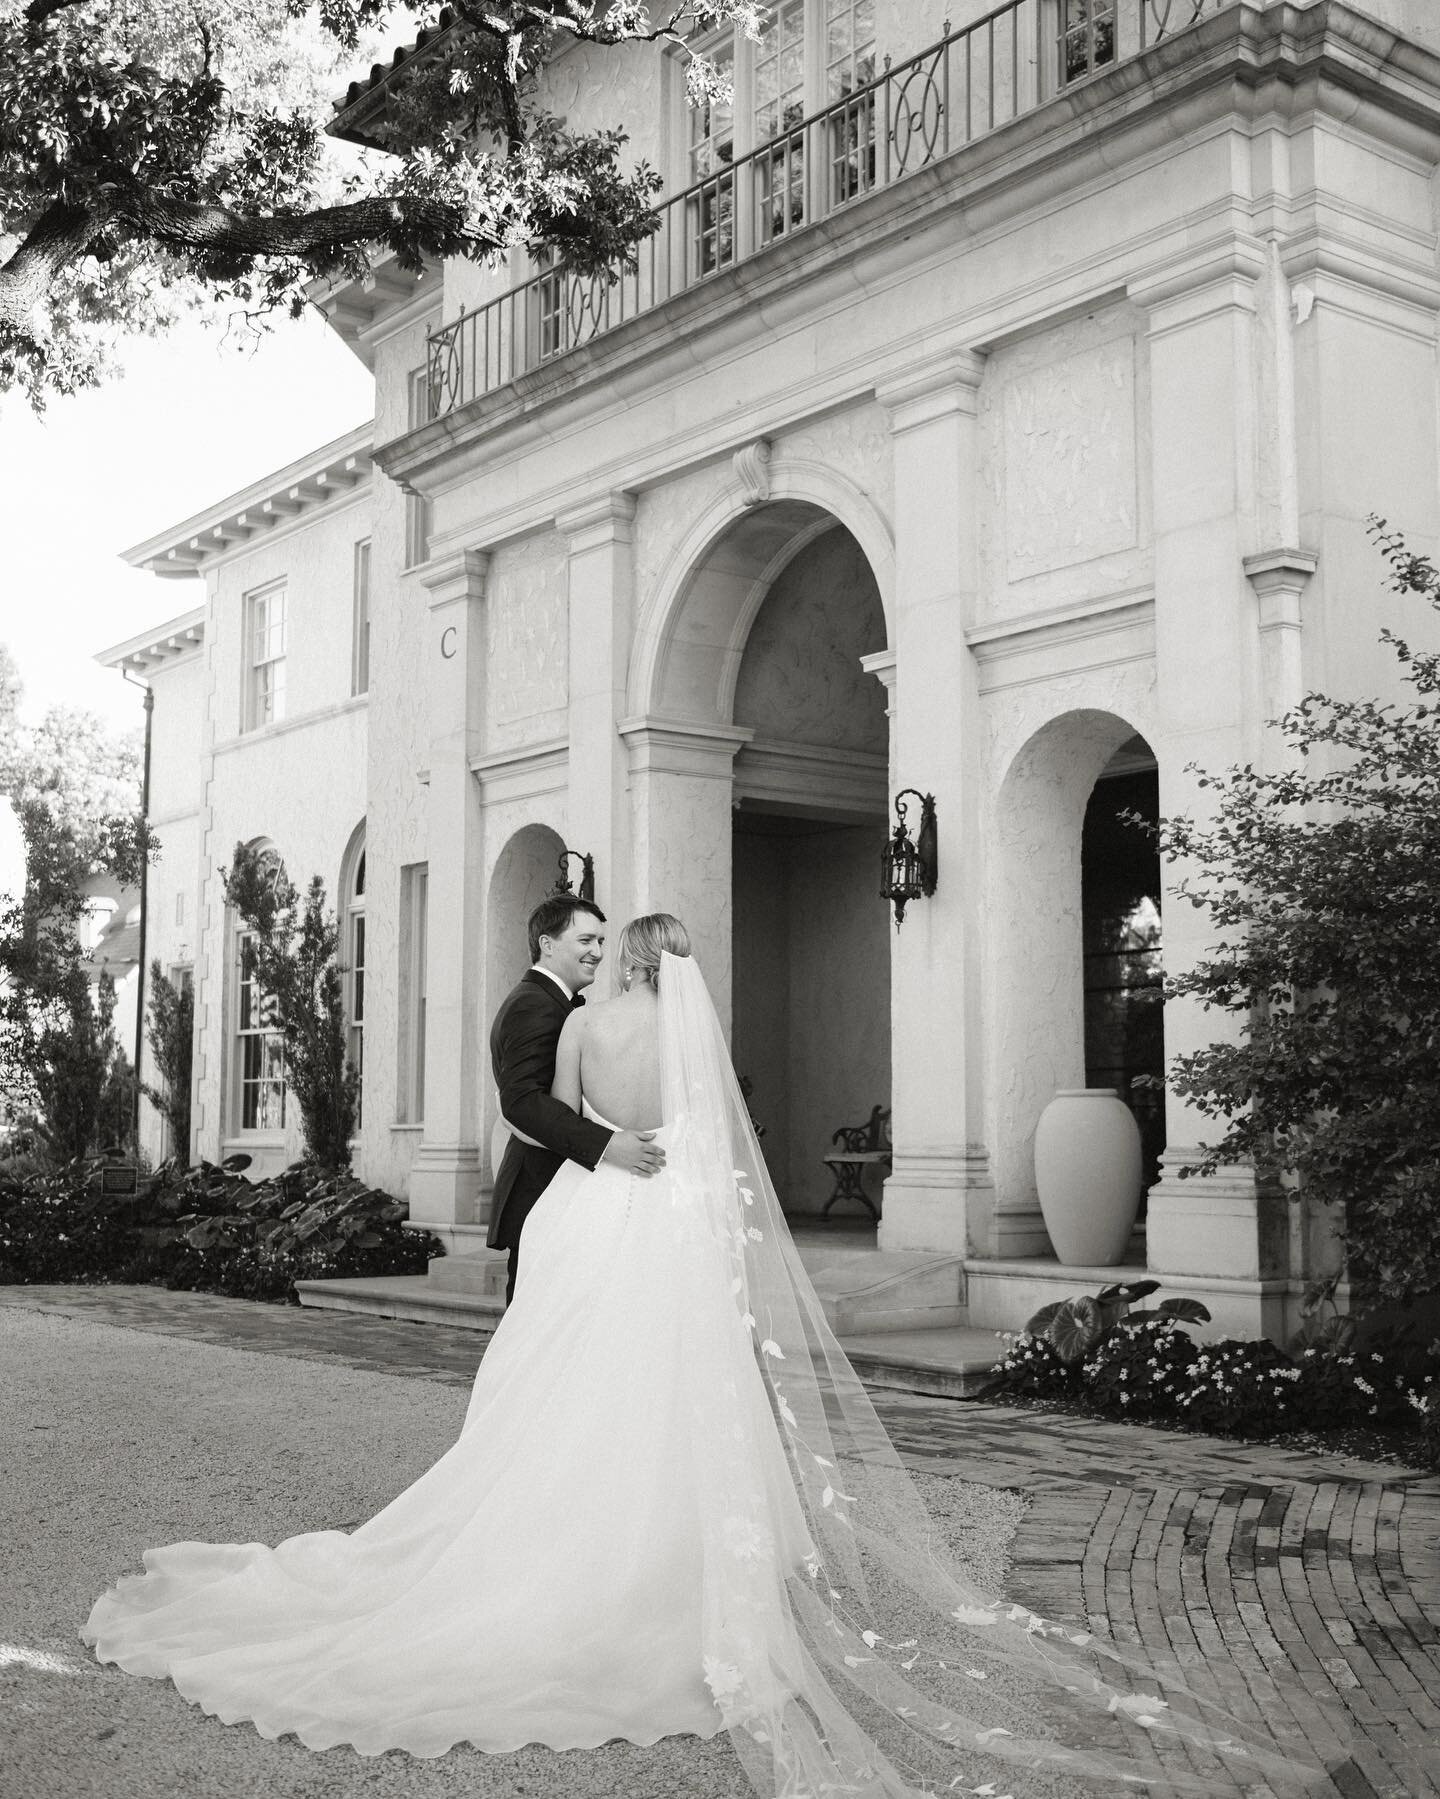 Moments after becoming Mr. &amp; Mrs. Huffstutler 🤍 4-15-23
.
.
#luxuryweddings #atxweddings #austinweddingplanner #austinweddings #weddinginspo #weddingtrends